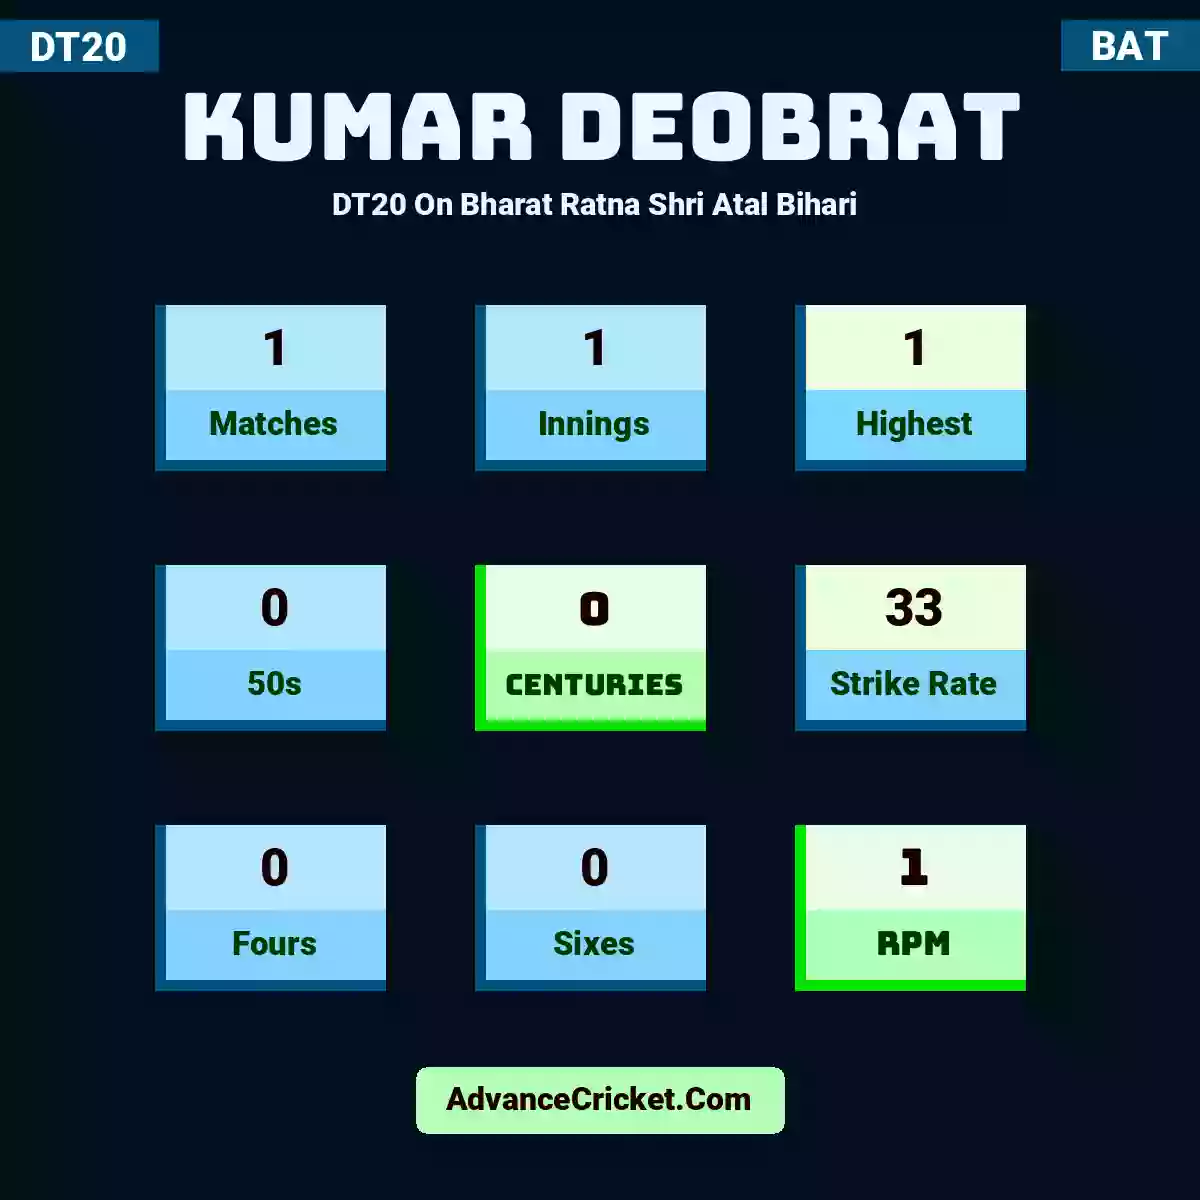 Kumar Deobrat DT20  On Bharat Ratna Shri Atal Bihari , Kumar Deobrat played 1 matches, scored 1 runs as highest, 0 half-centuries, and 0 centuries, with a strike rate of 33. K.Deobrat hit 0 fours and 0 sixes, with an RPM of 1.